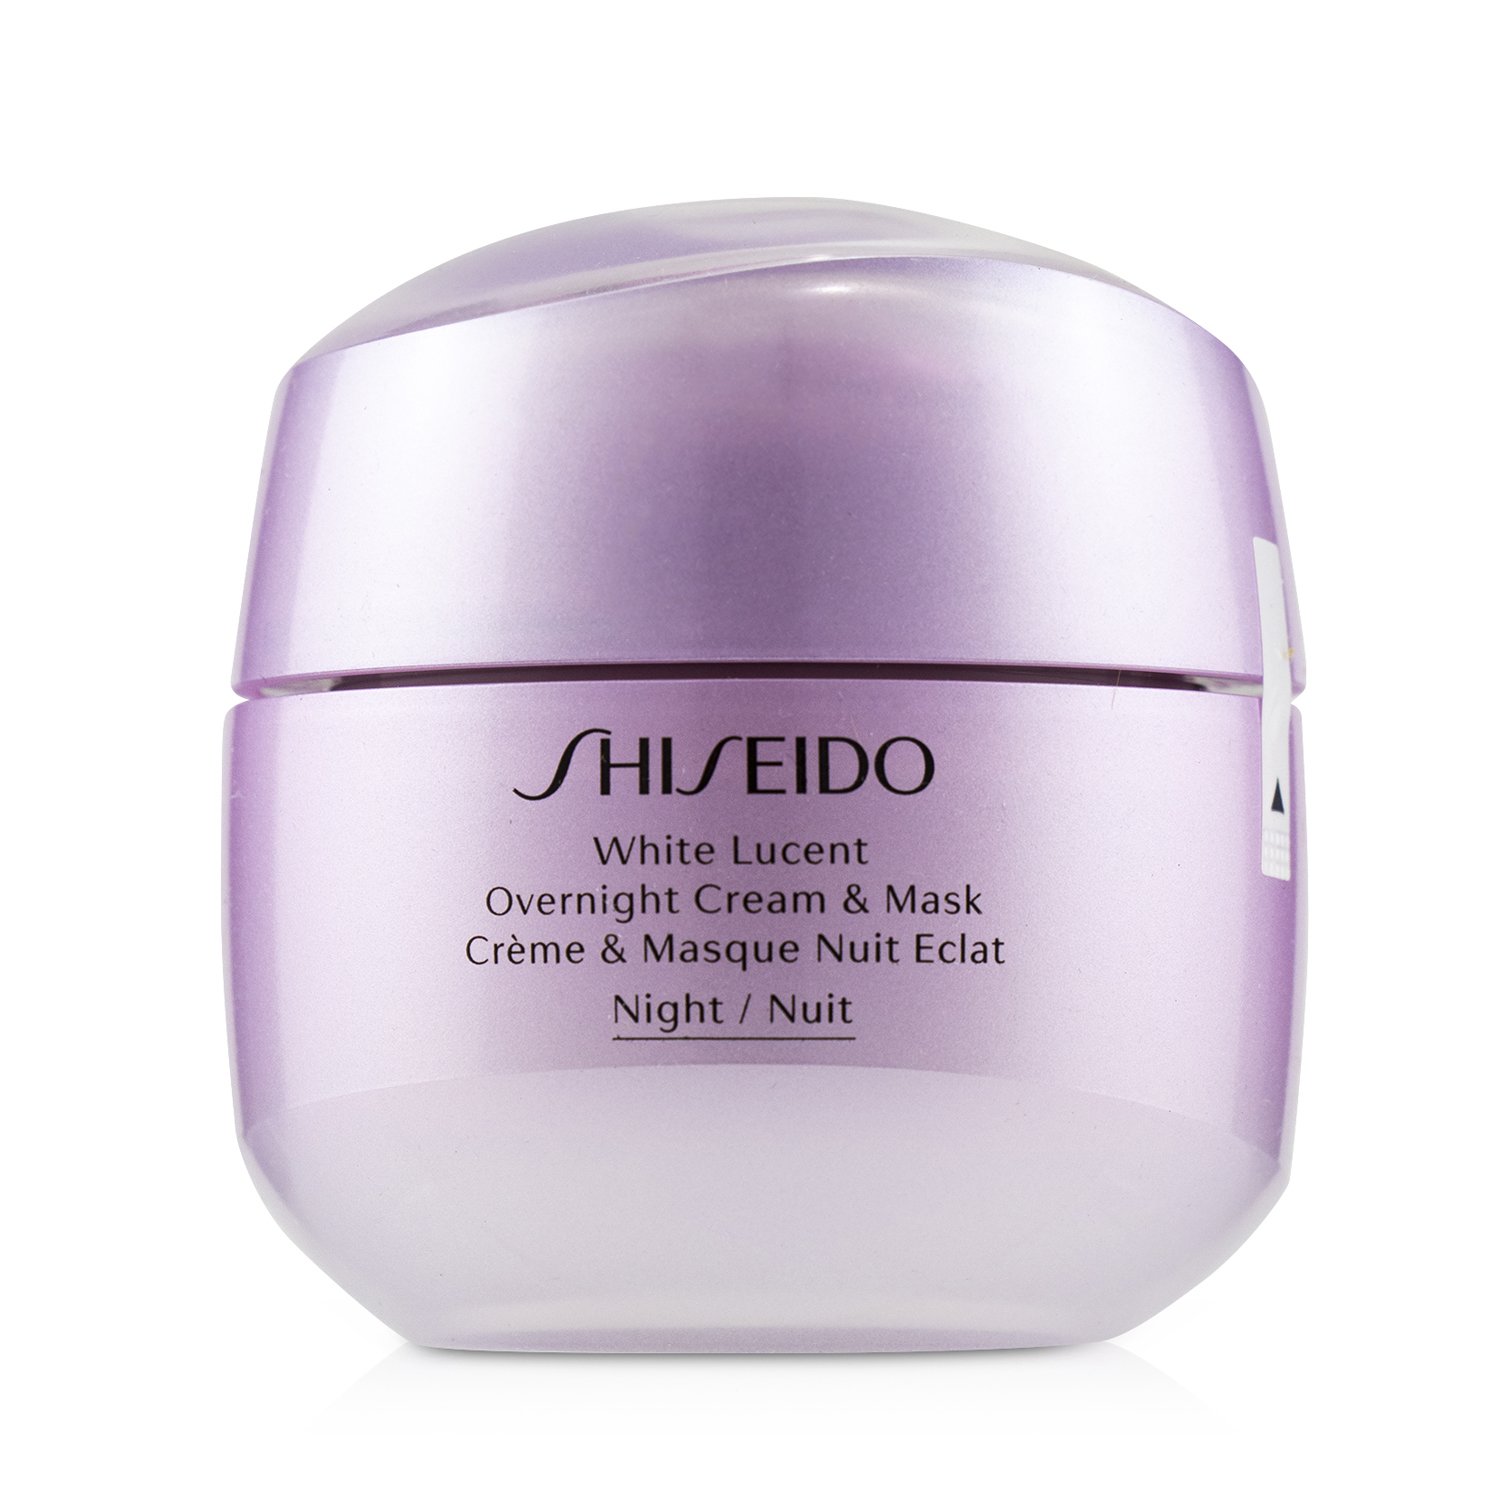 Shiseido ไวท์ ลูเซนท์ โอเวอร์ไนท์ ครีม แอนด์ มาส์ก 75ml/2.6oz